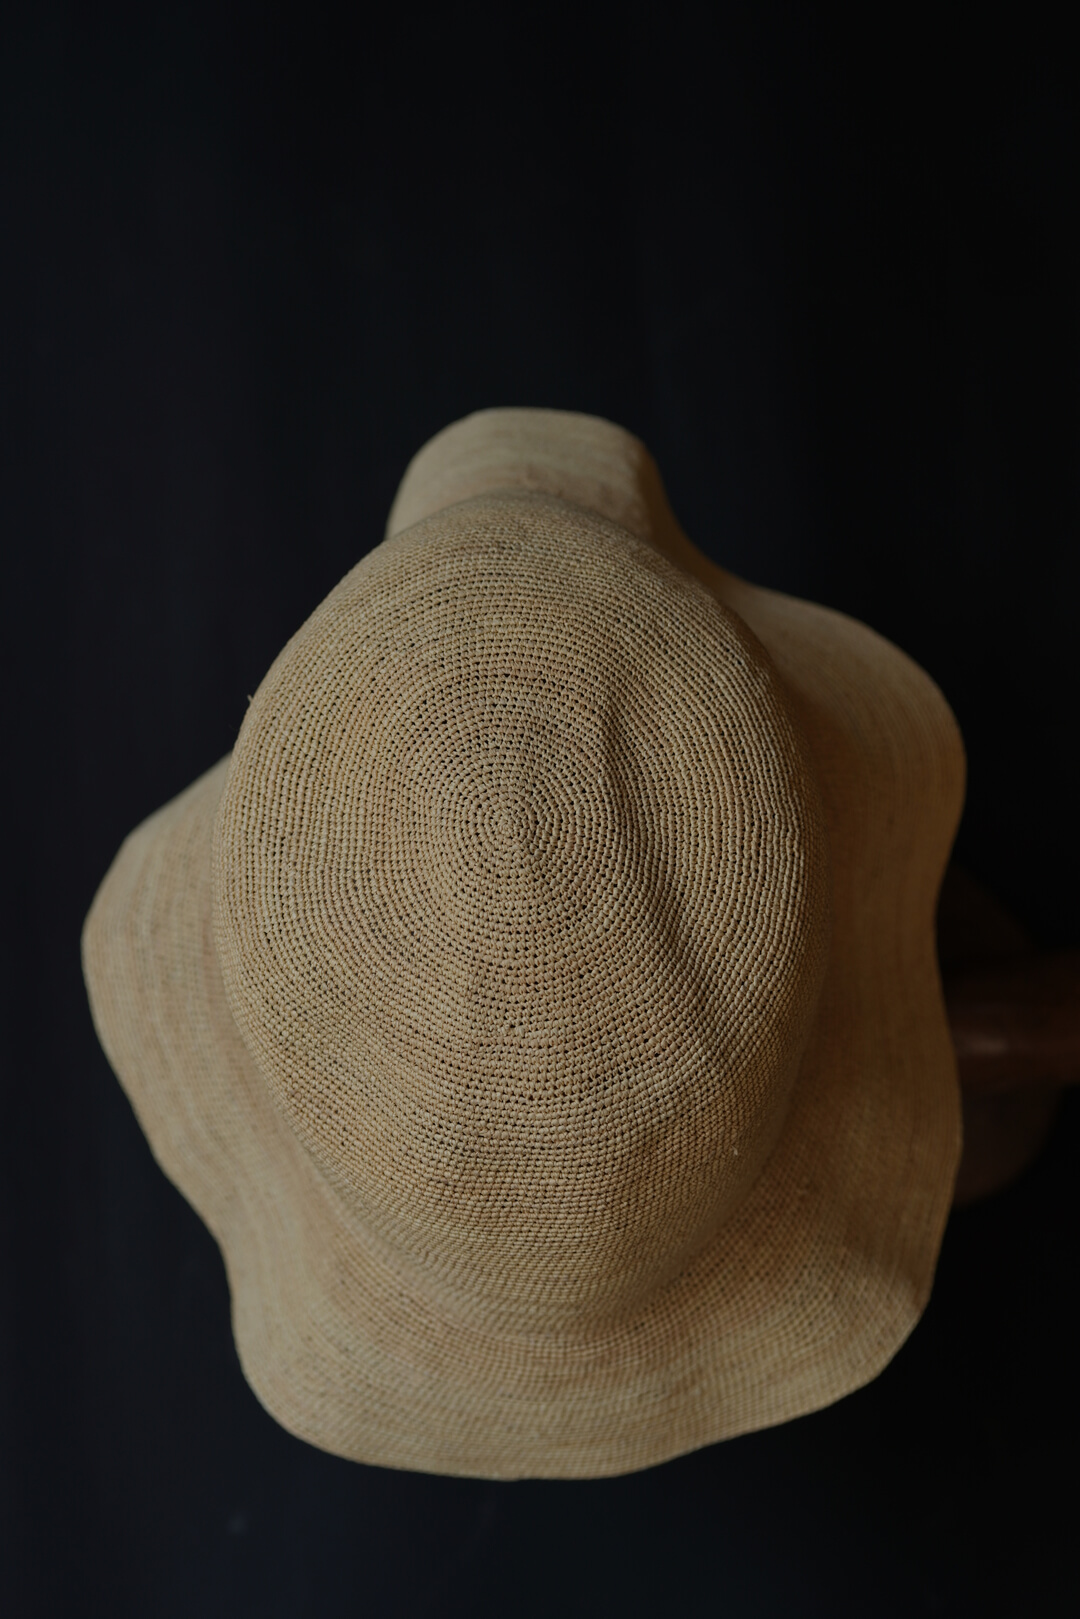 fording jipijapa hat by STETSON